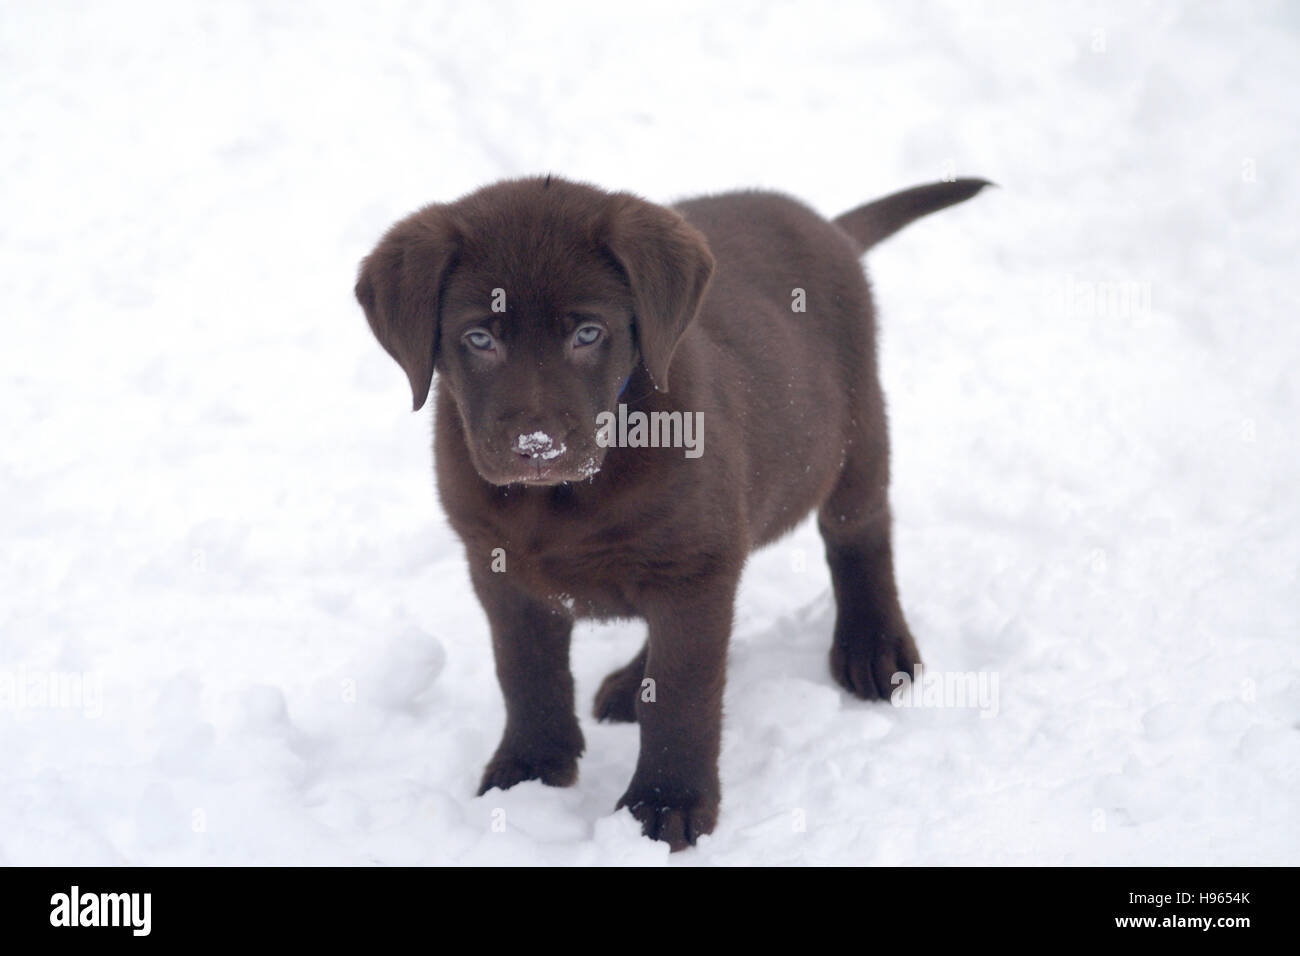 8 week old Chocolate Labrador Retriever standing in snow Stock Photo